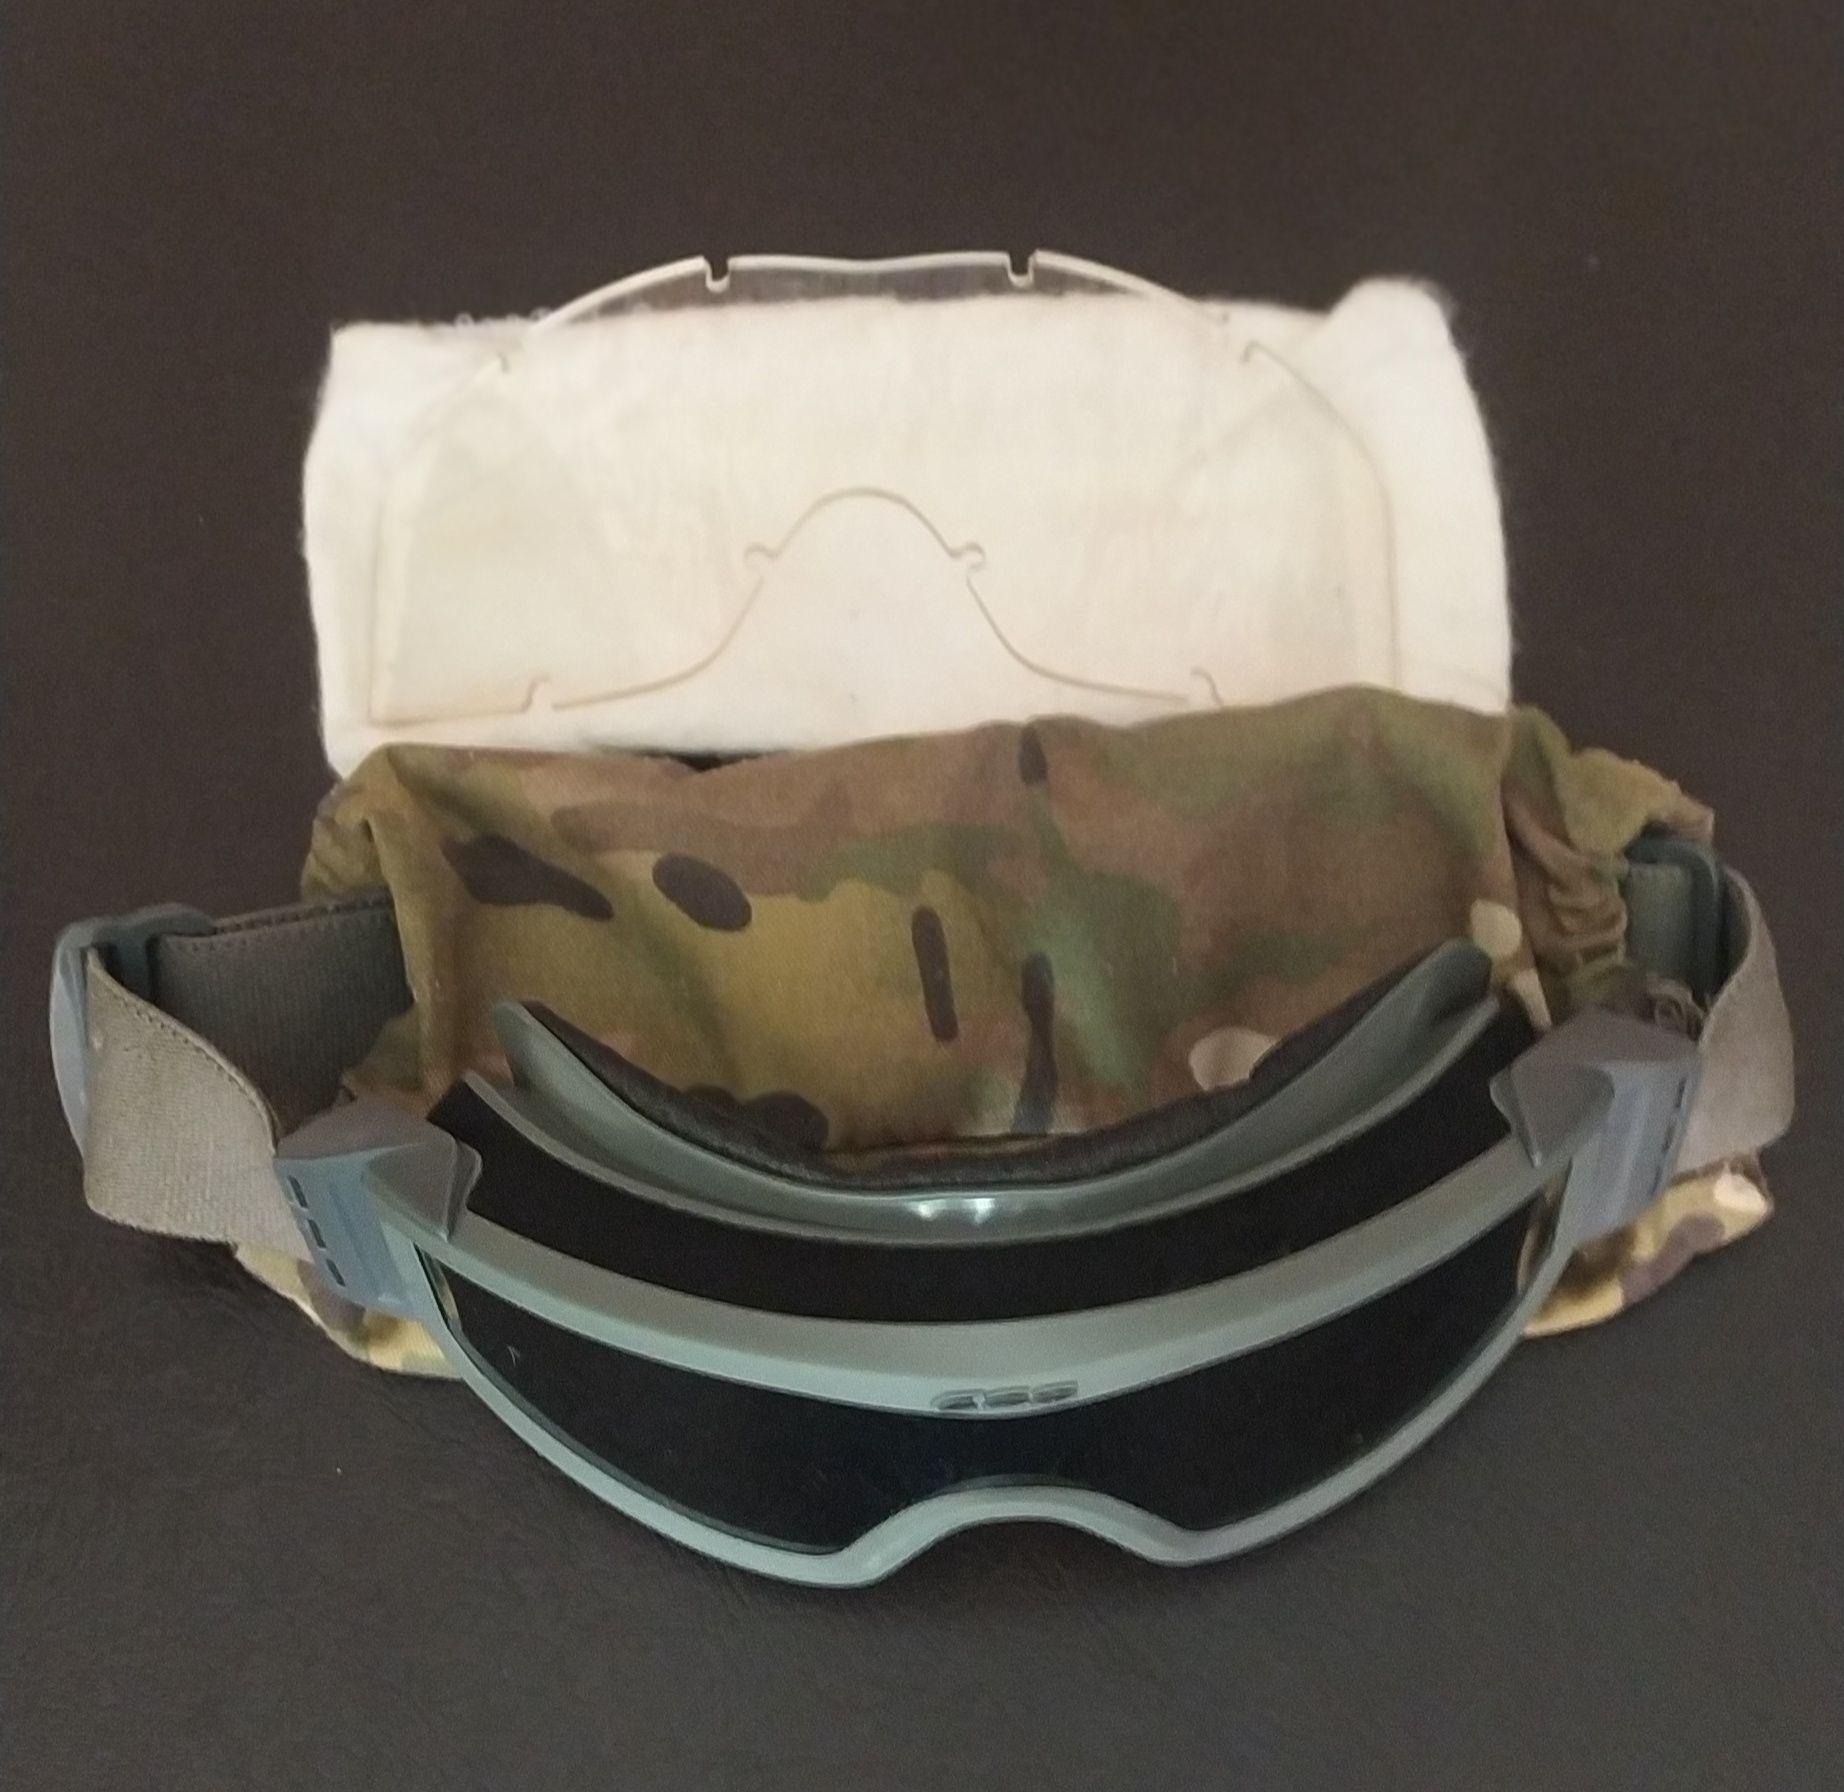 Тактичні очки-маска ESS Profile NVG